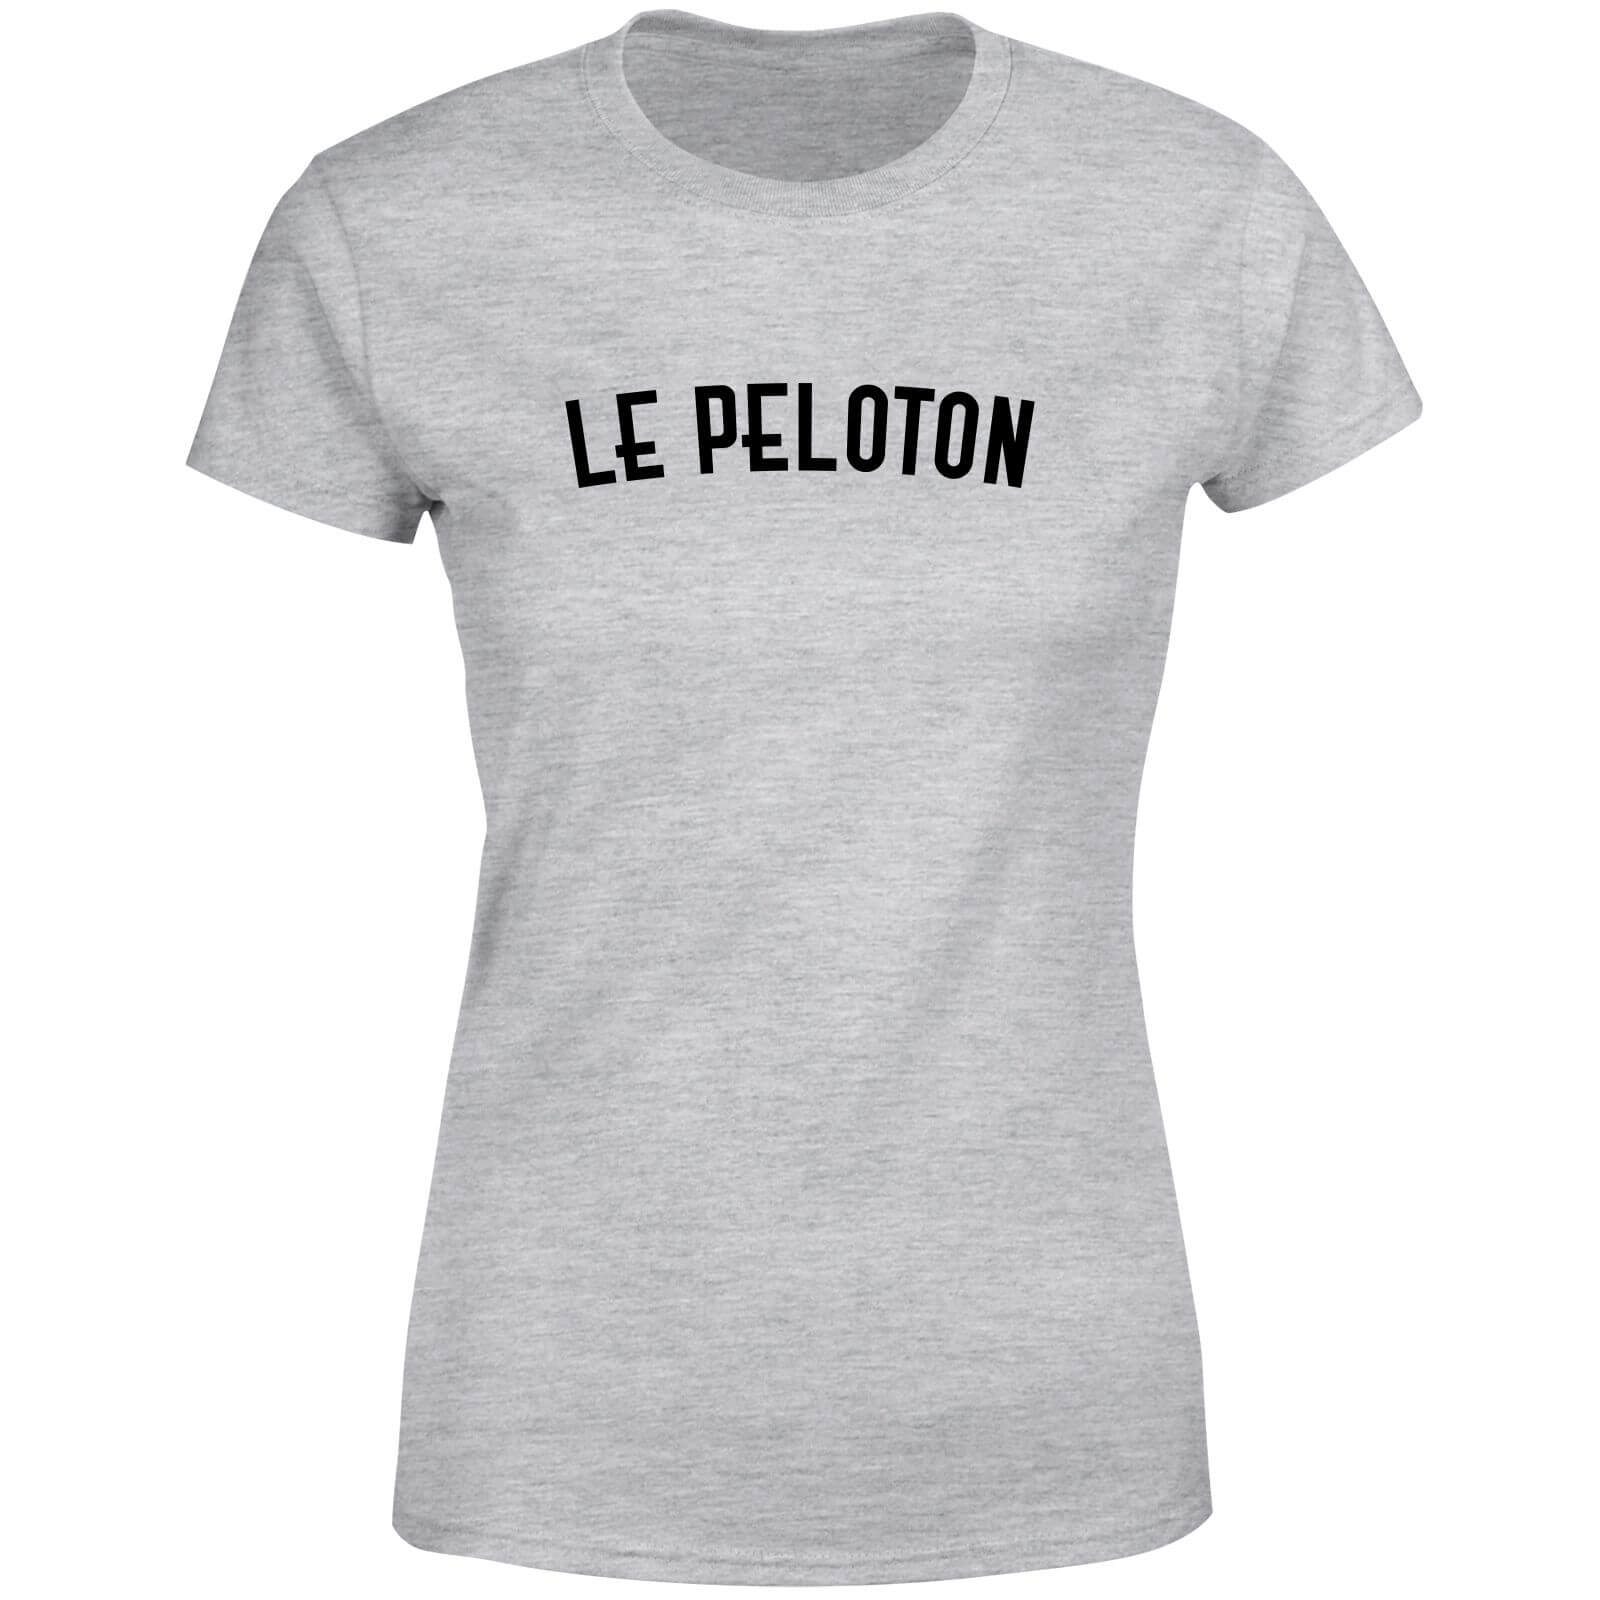 Le Peloton Women's T-Shirt - Grey - 4XL - Grey